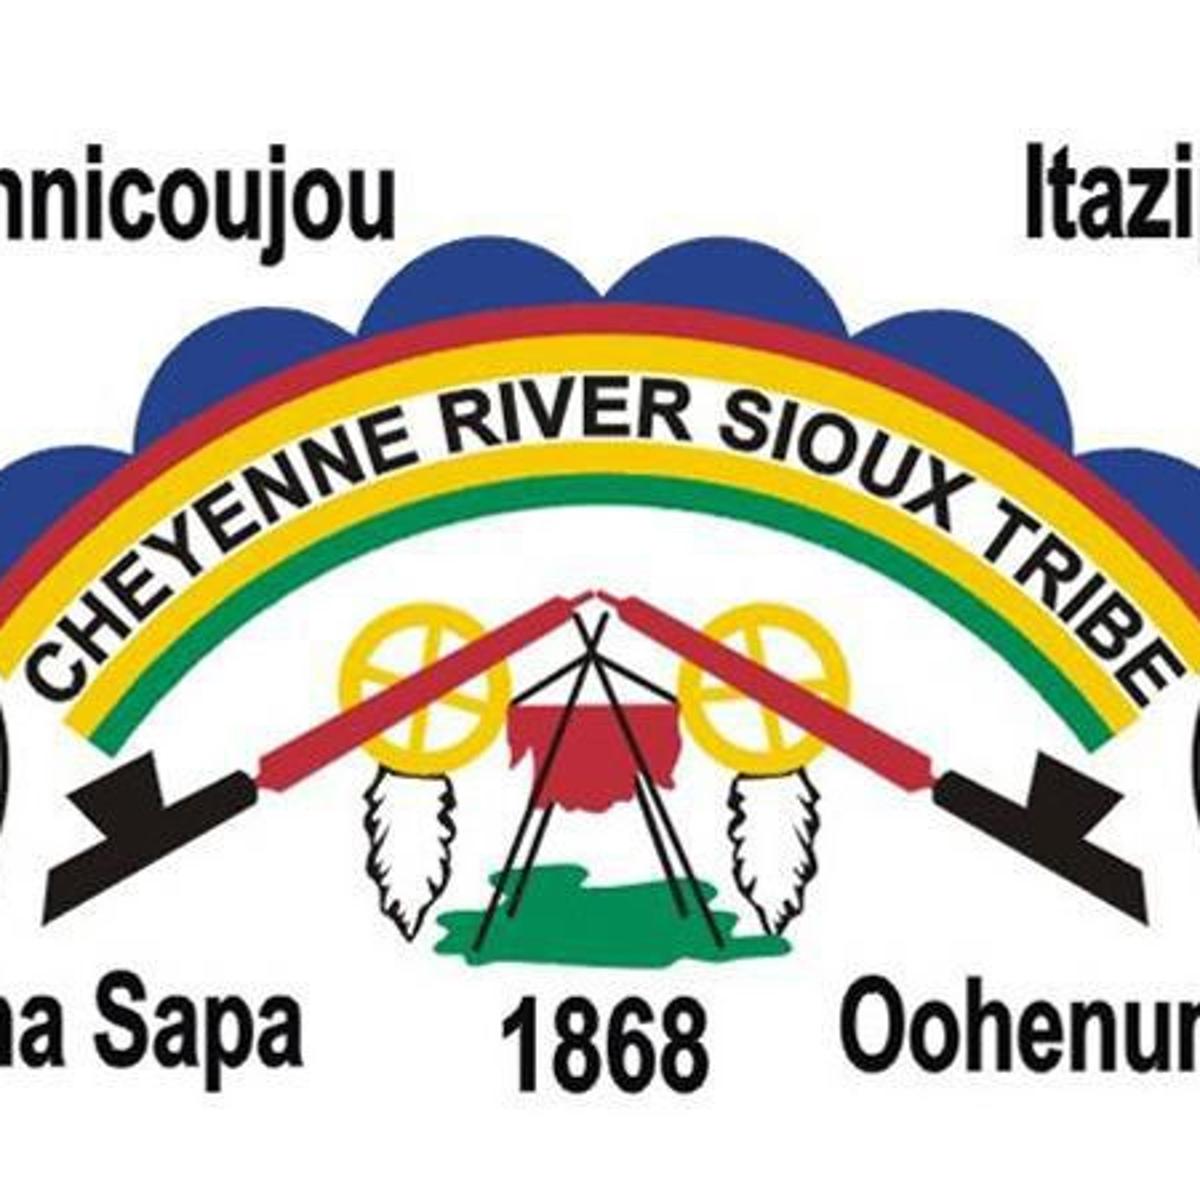 Cheyenne River Sioux Tribe logo